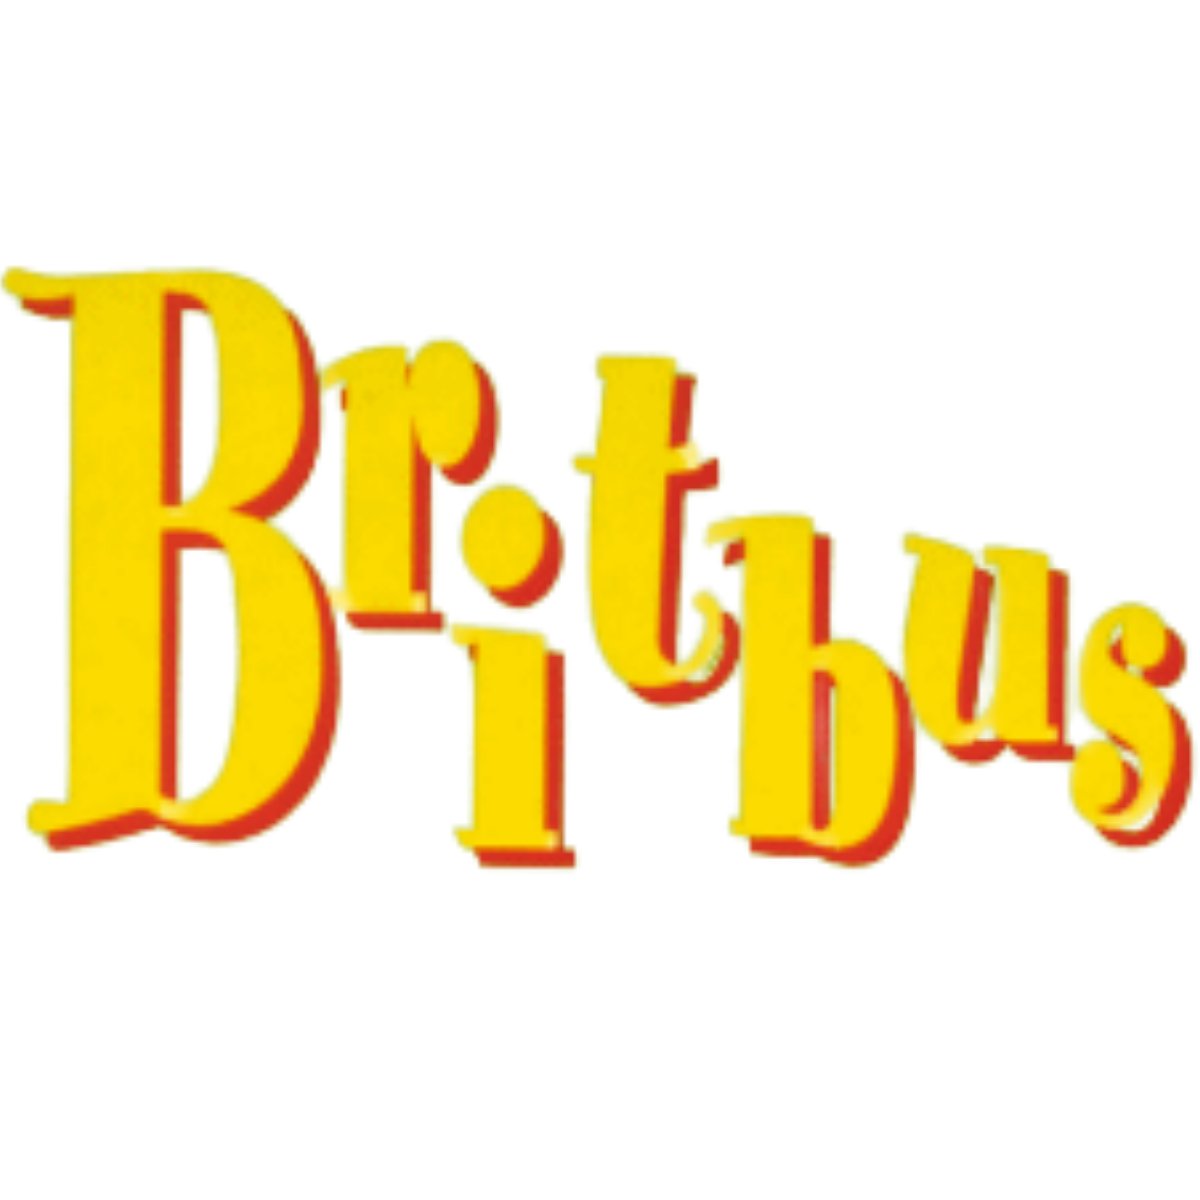 Britbus Model Buses - Phillips Hobbies